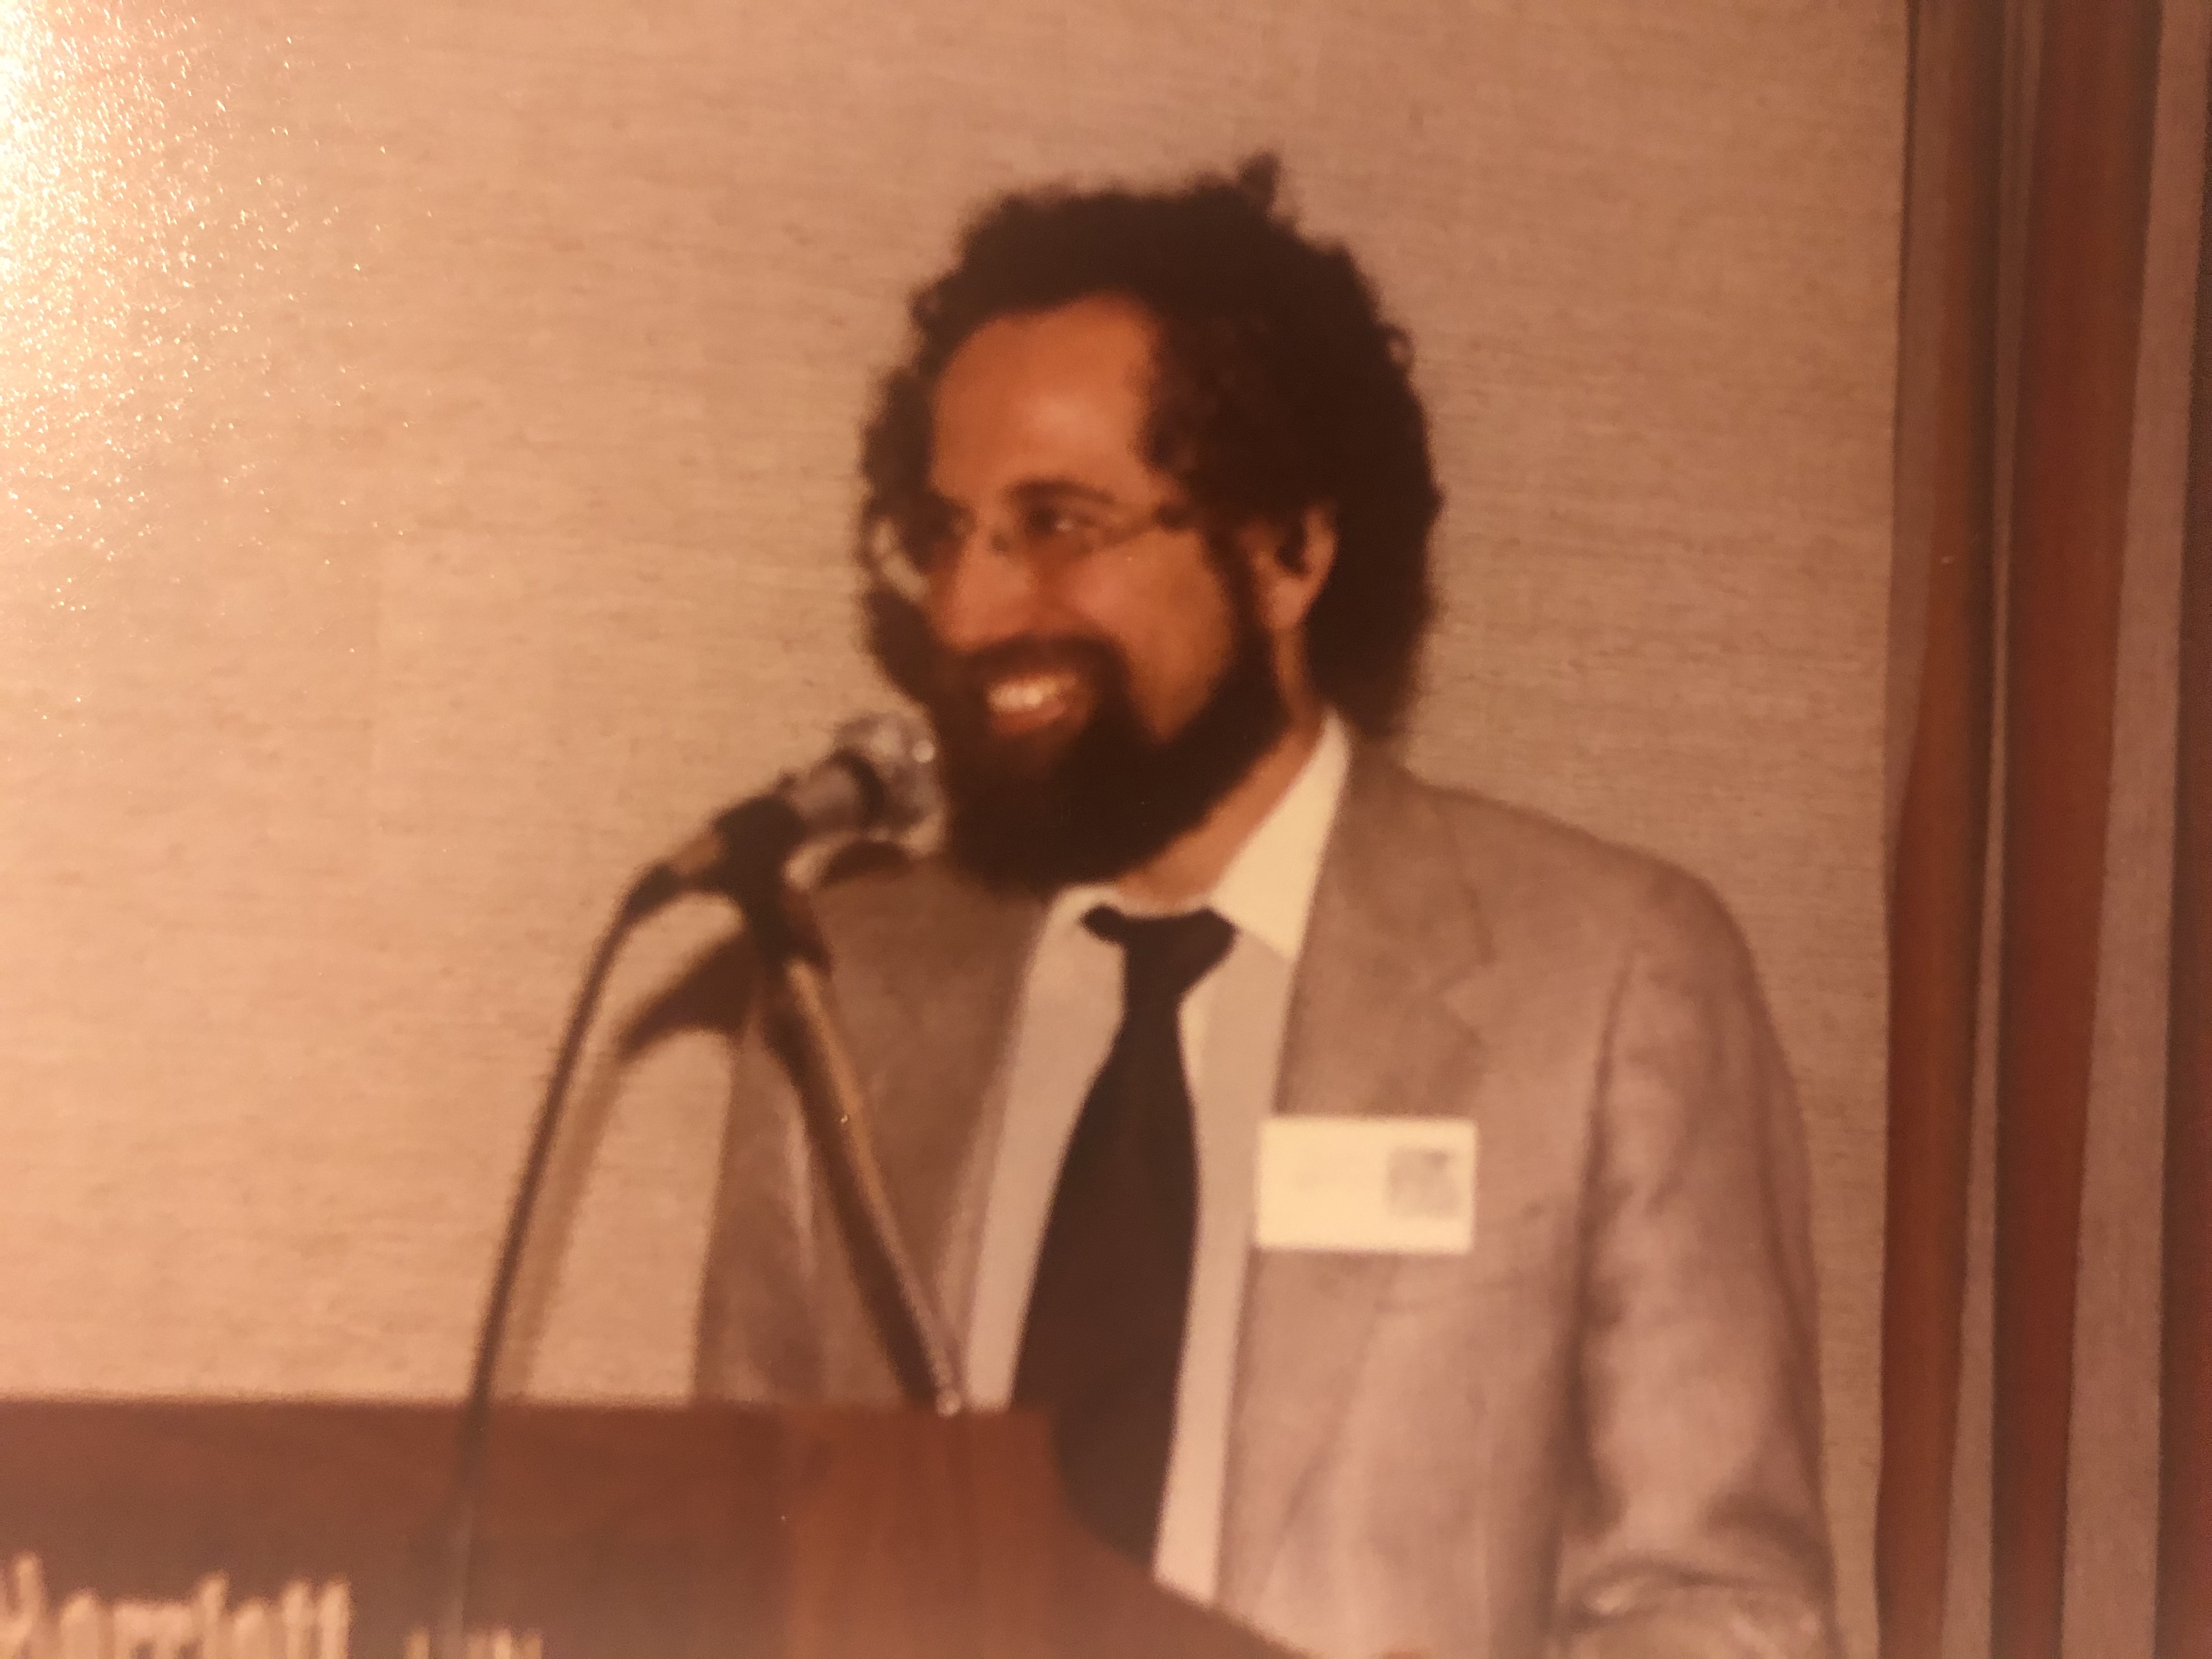 photo of David Minkus speaking at a podium